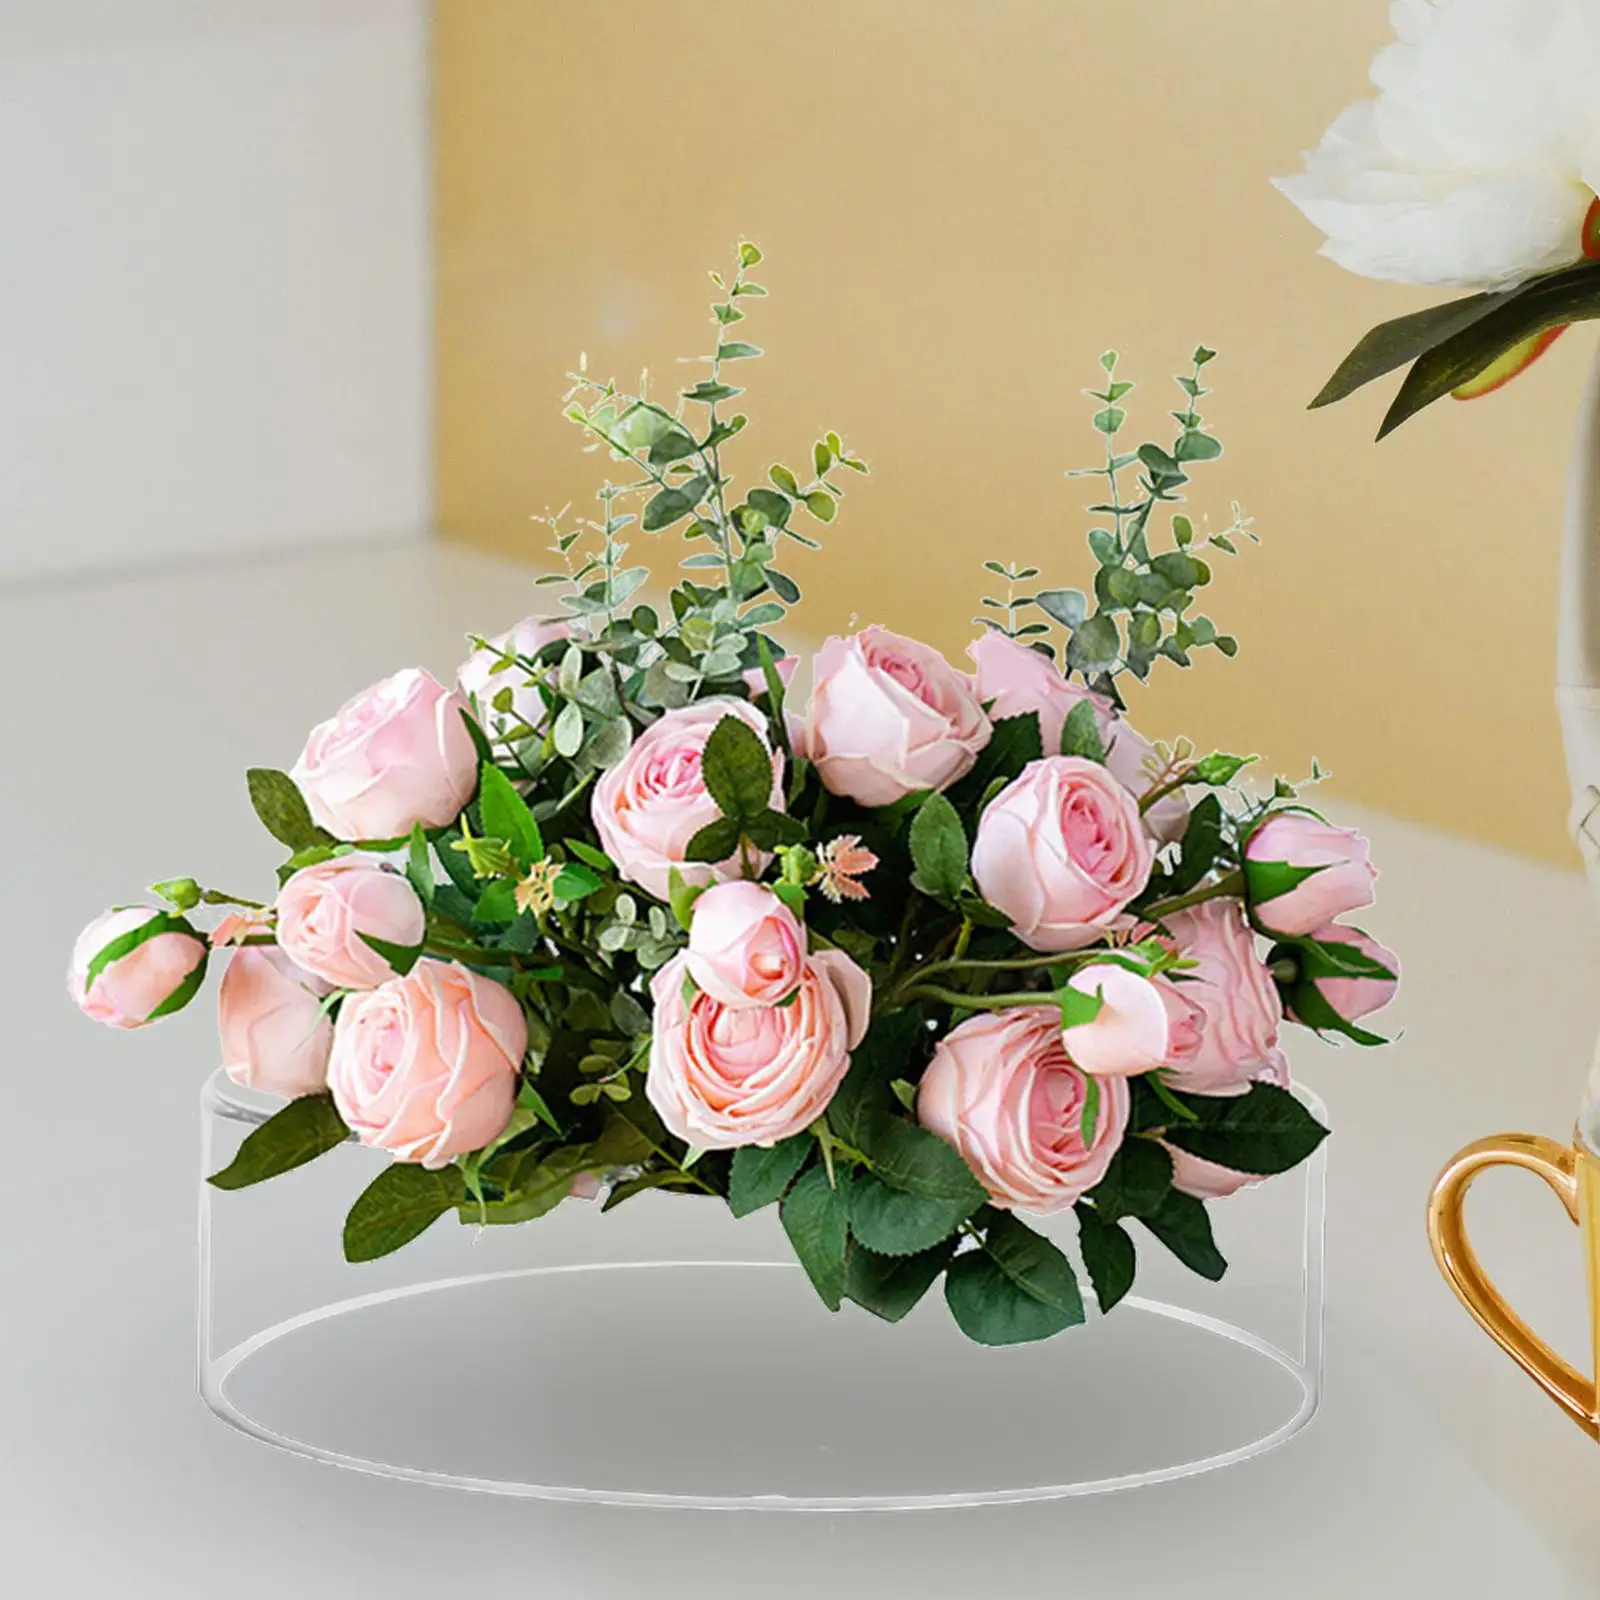 Acrylic Flower Vase Floral Arrangement 16 Holes Decorative Art Vases for Dining Table Wedding Party Shelf Home Office Decor